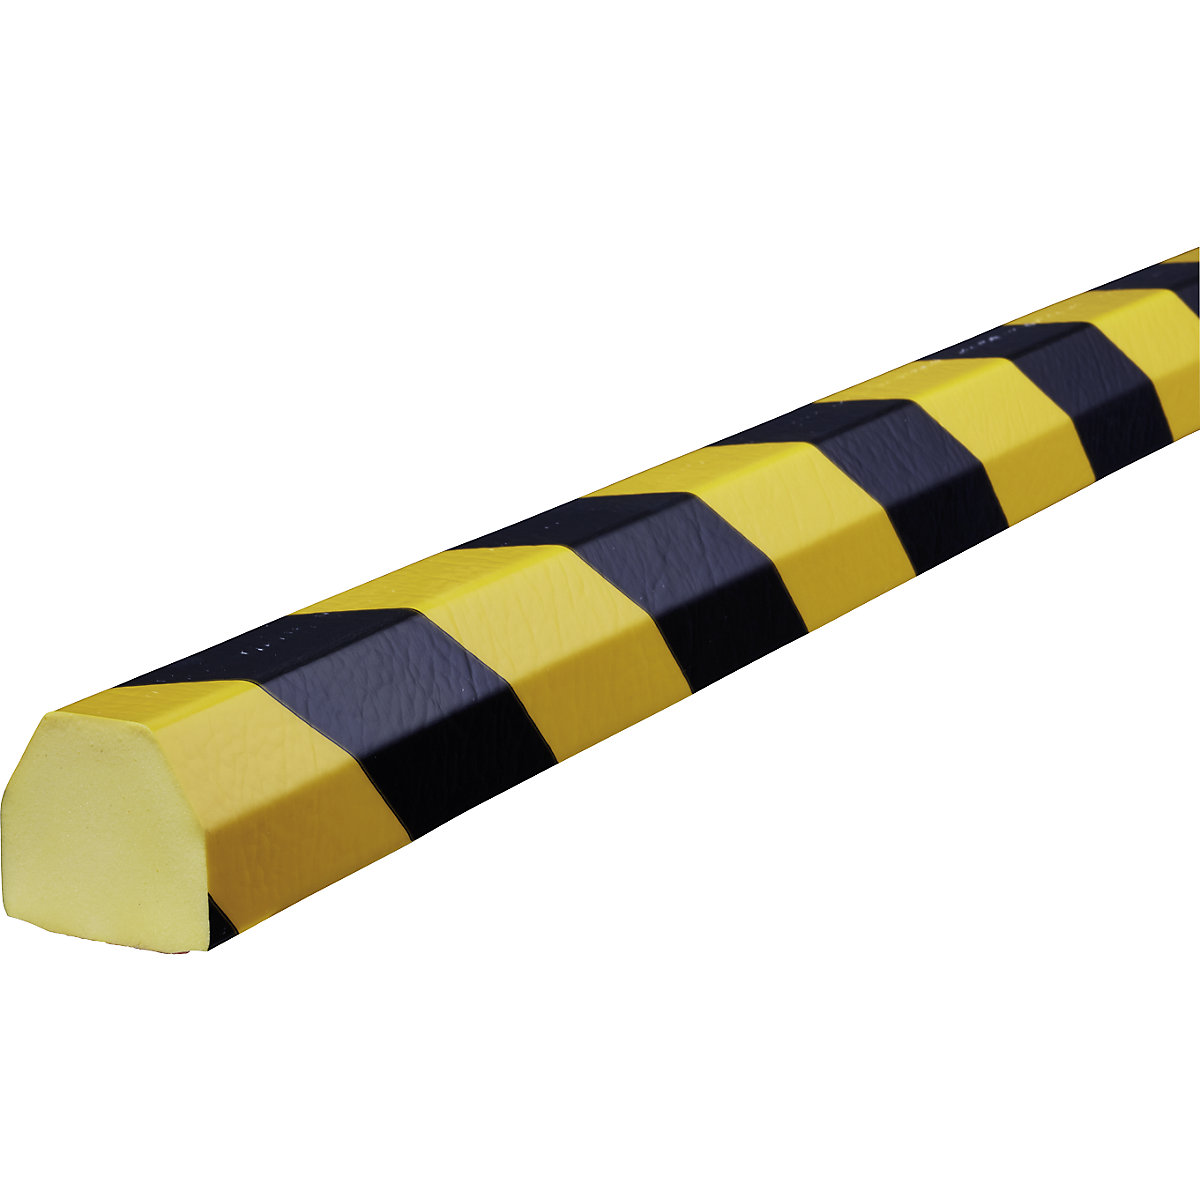 Ochrana plôch Knuffi® – SHG, typ CC, 1 m kus, čierna / žltá-18